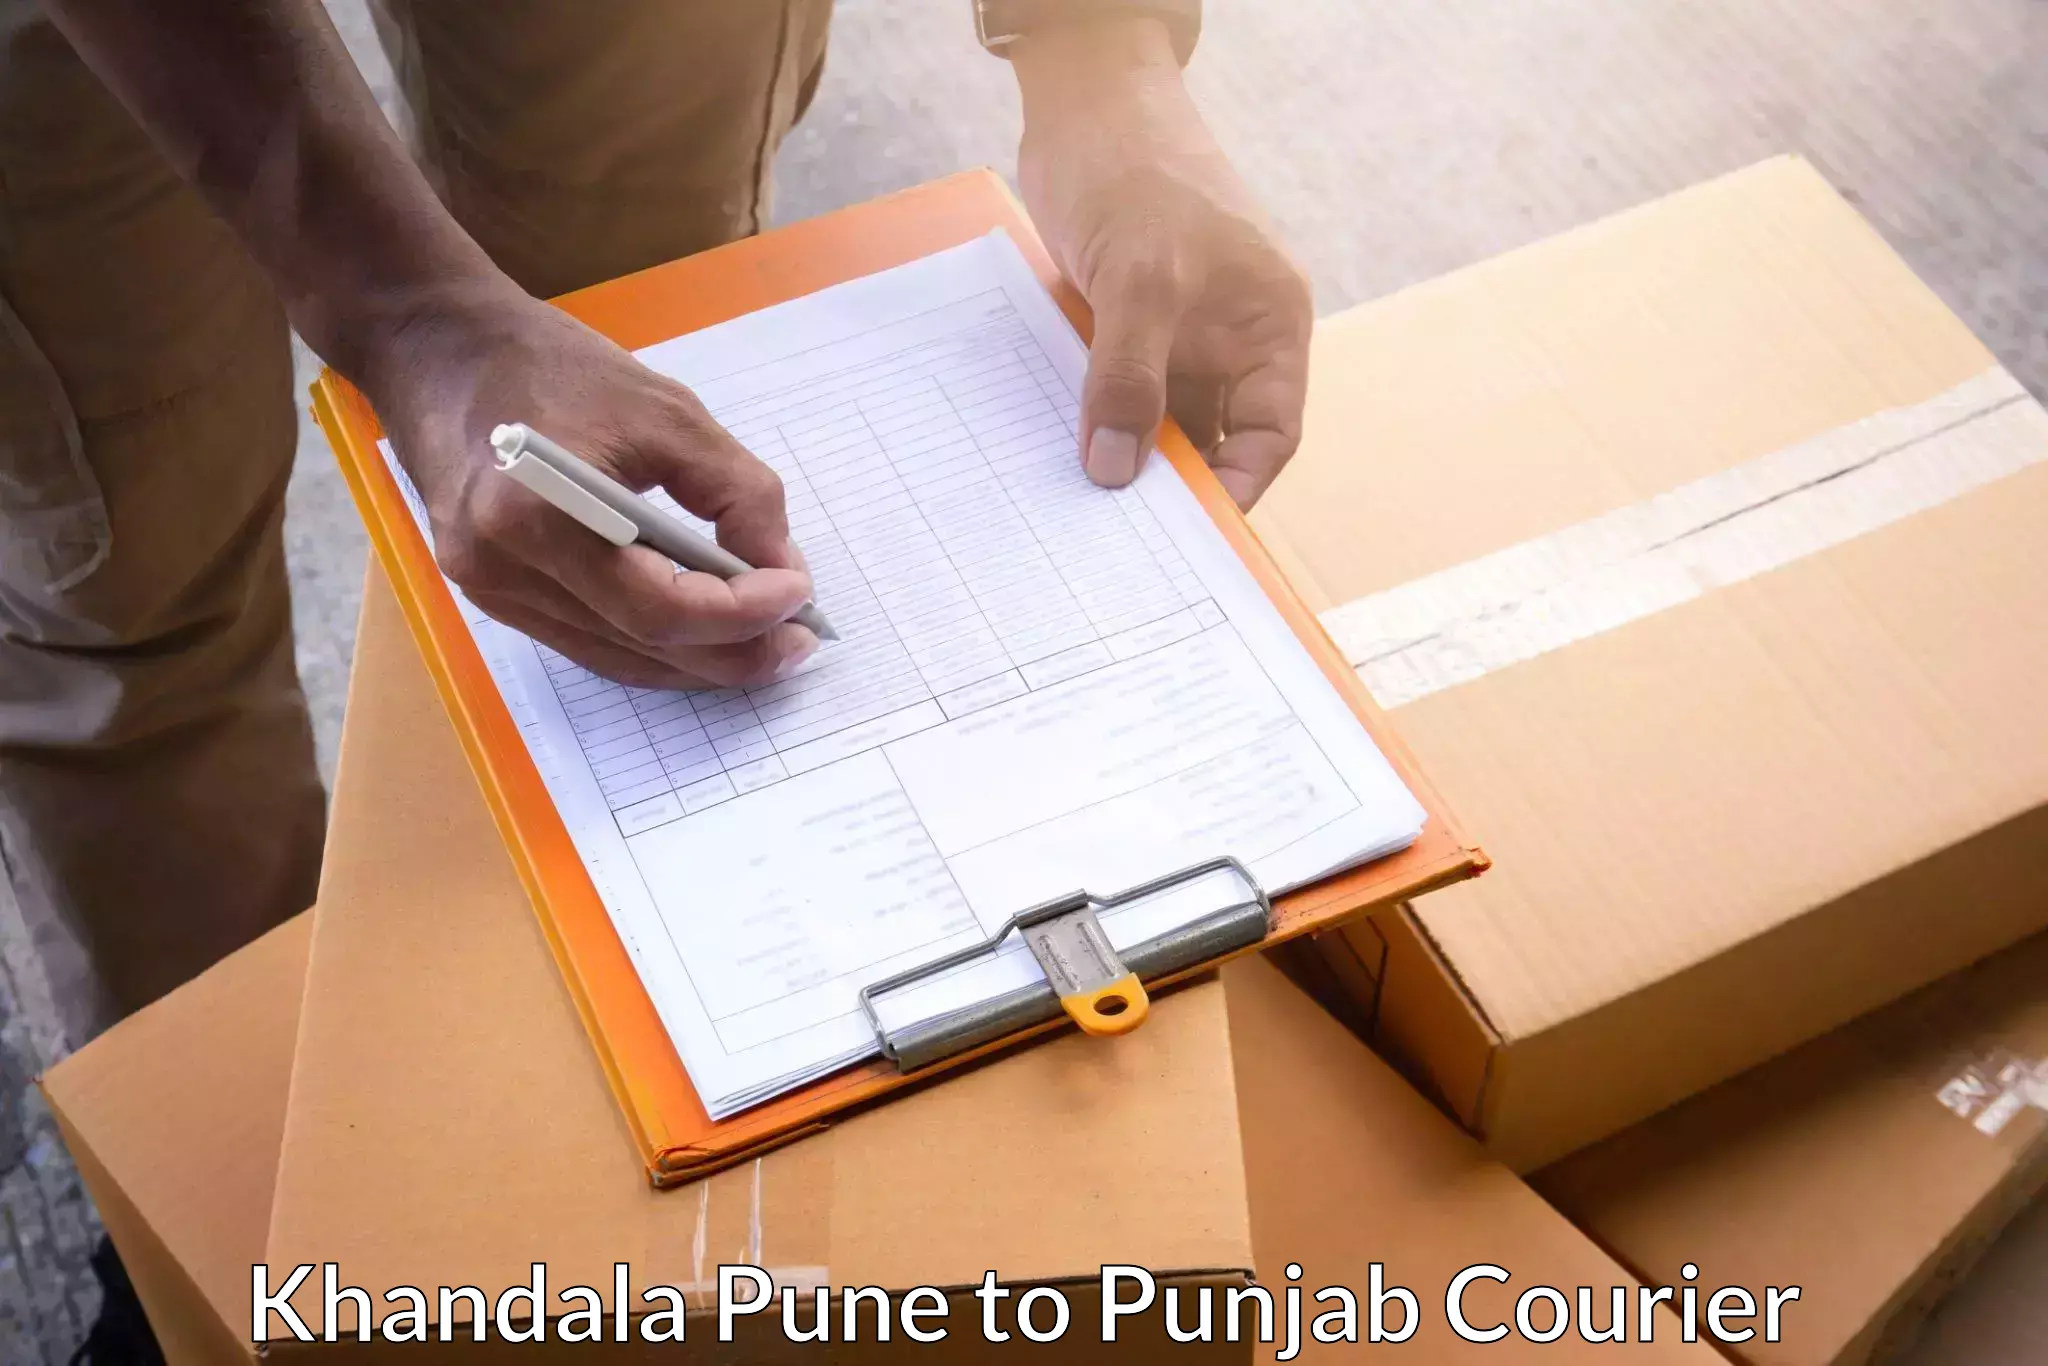 Specialized shipment handling Khandala Pune to Amritsar